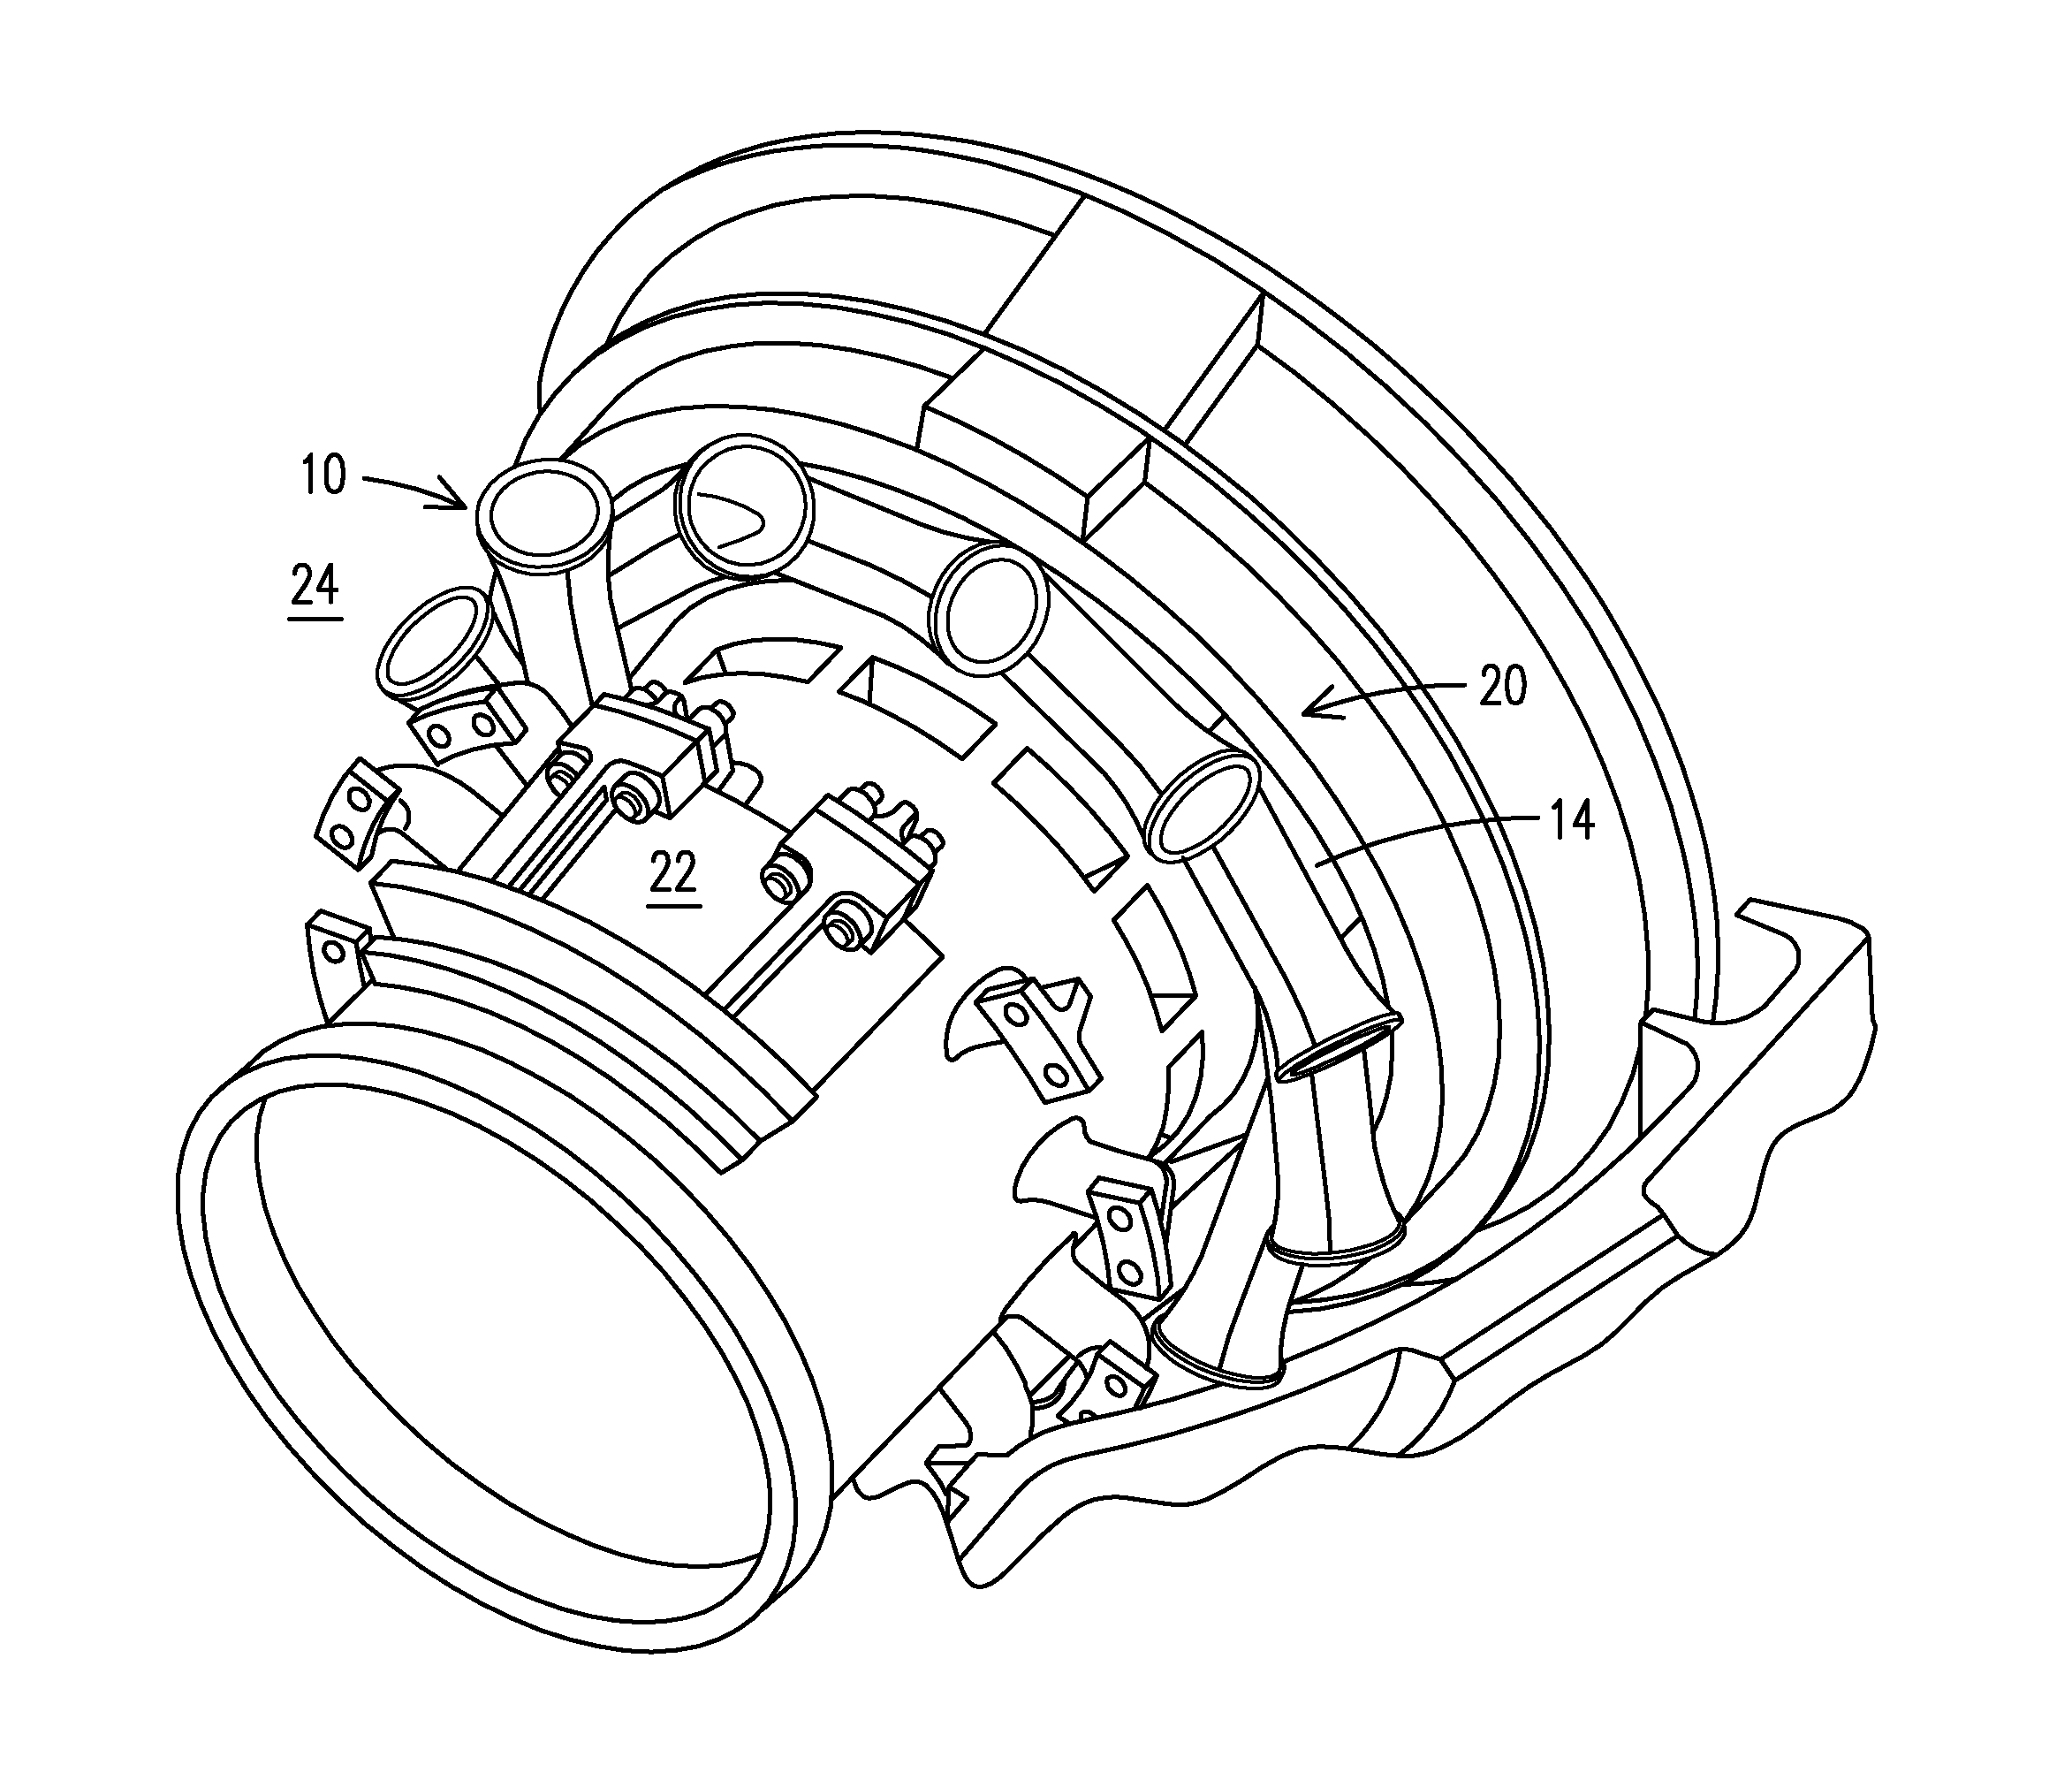 Gas turbine engine ducting arrangement having discrete insert